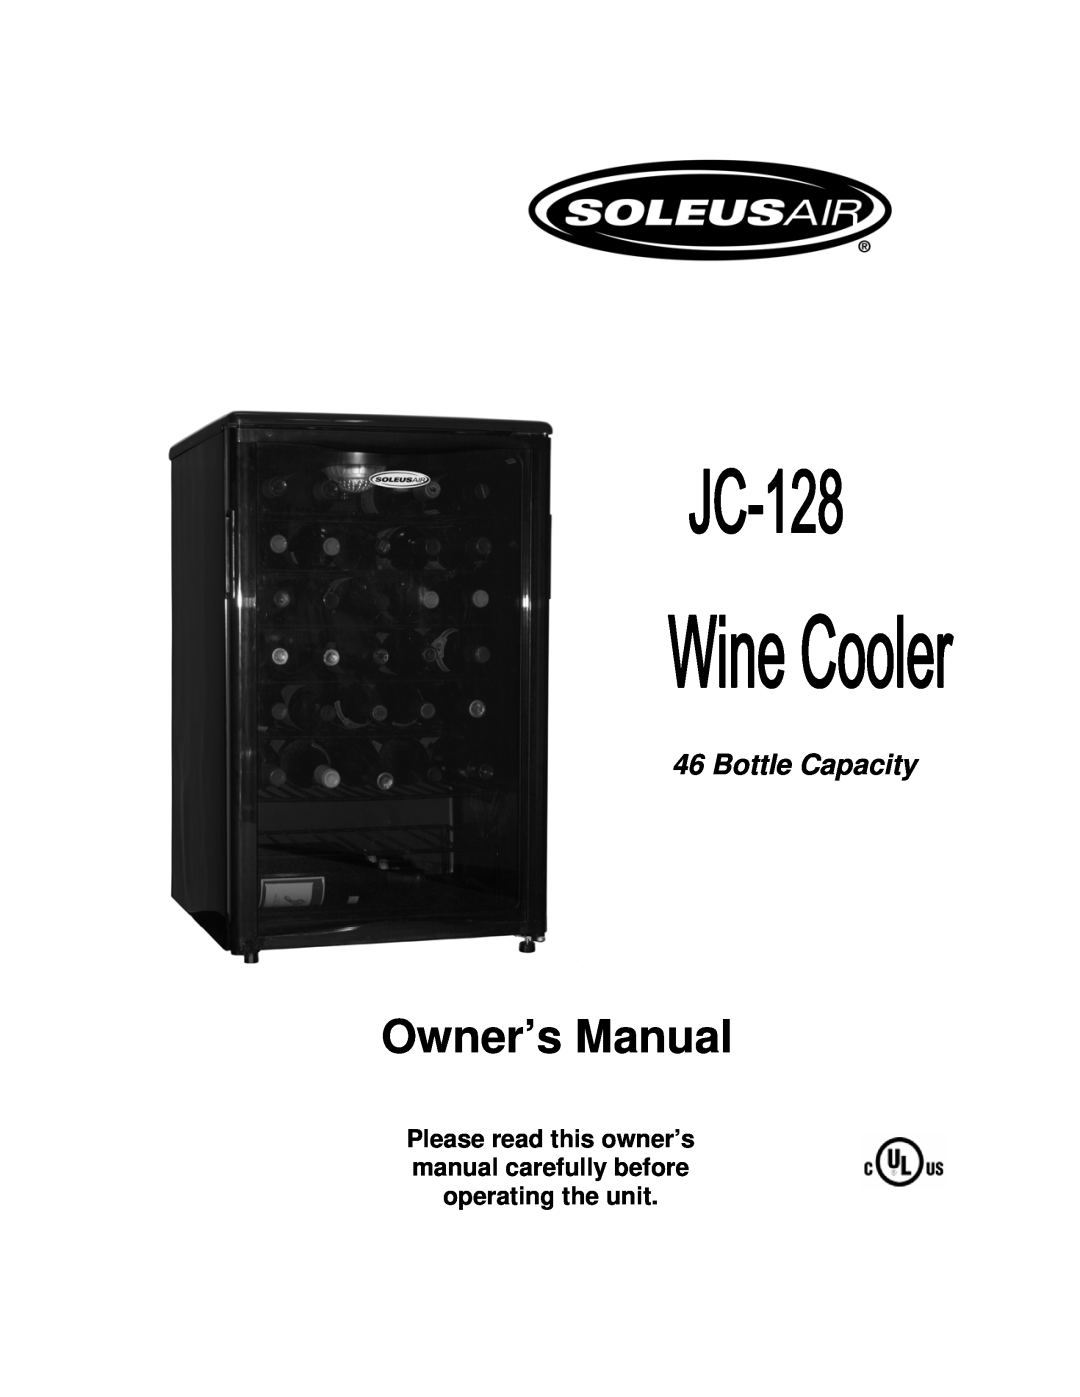 Soleus Air JC-128 owner manual Bottle Capacity 